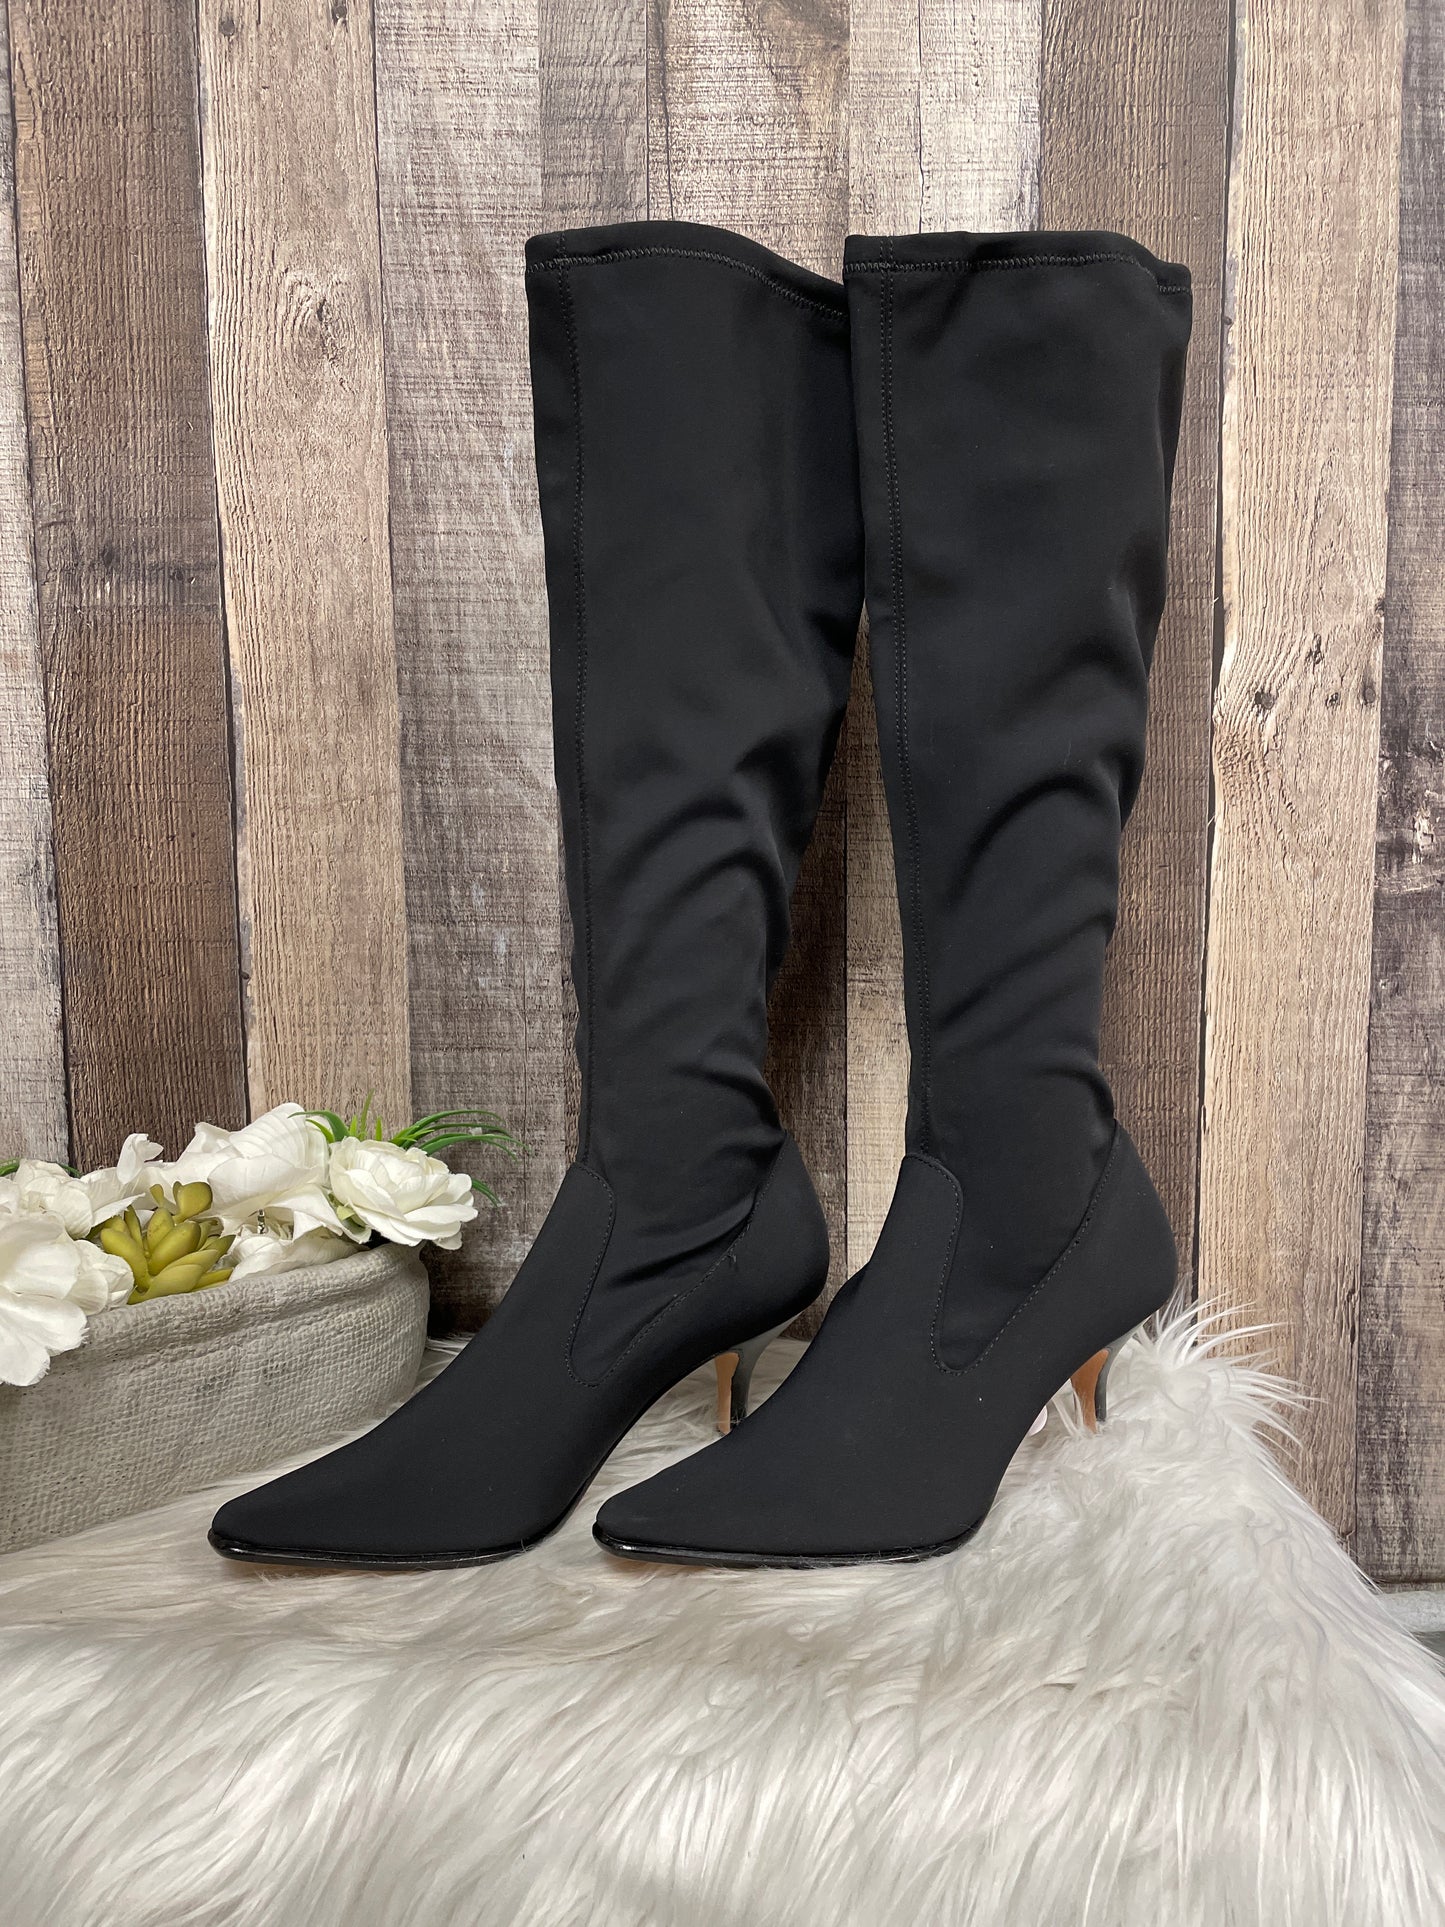 Boots Knee Heels By Donald Pliner  Size: 7